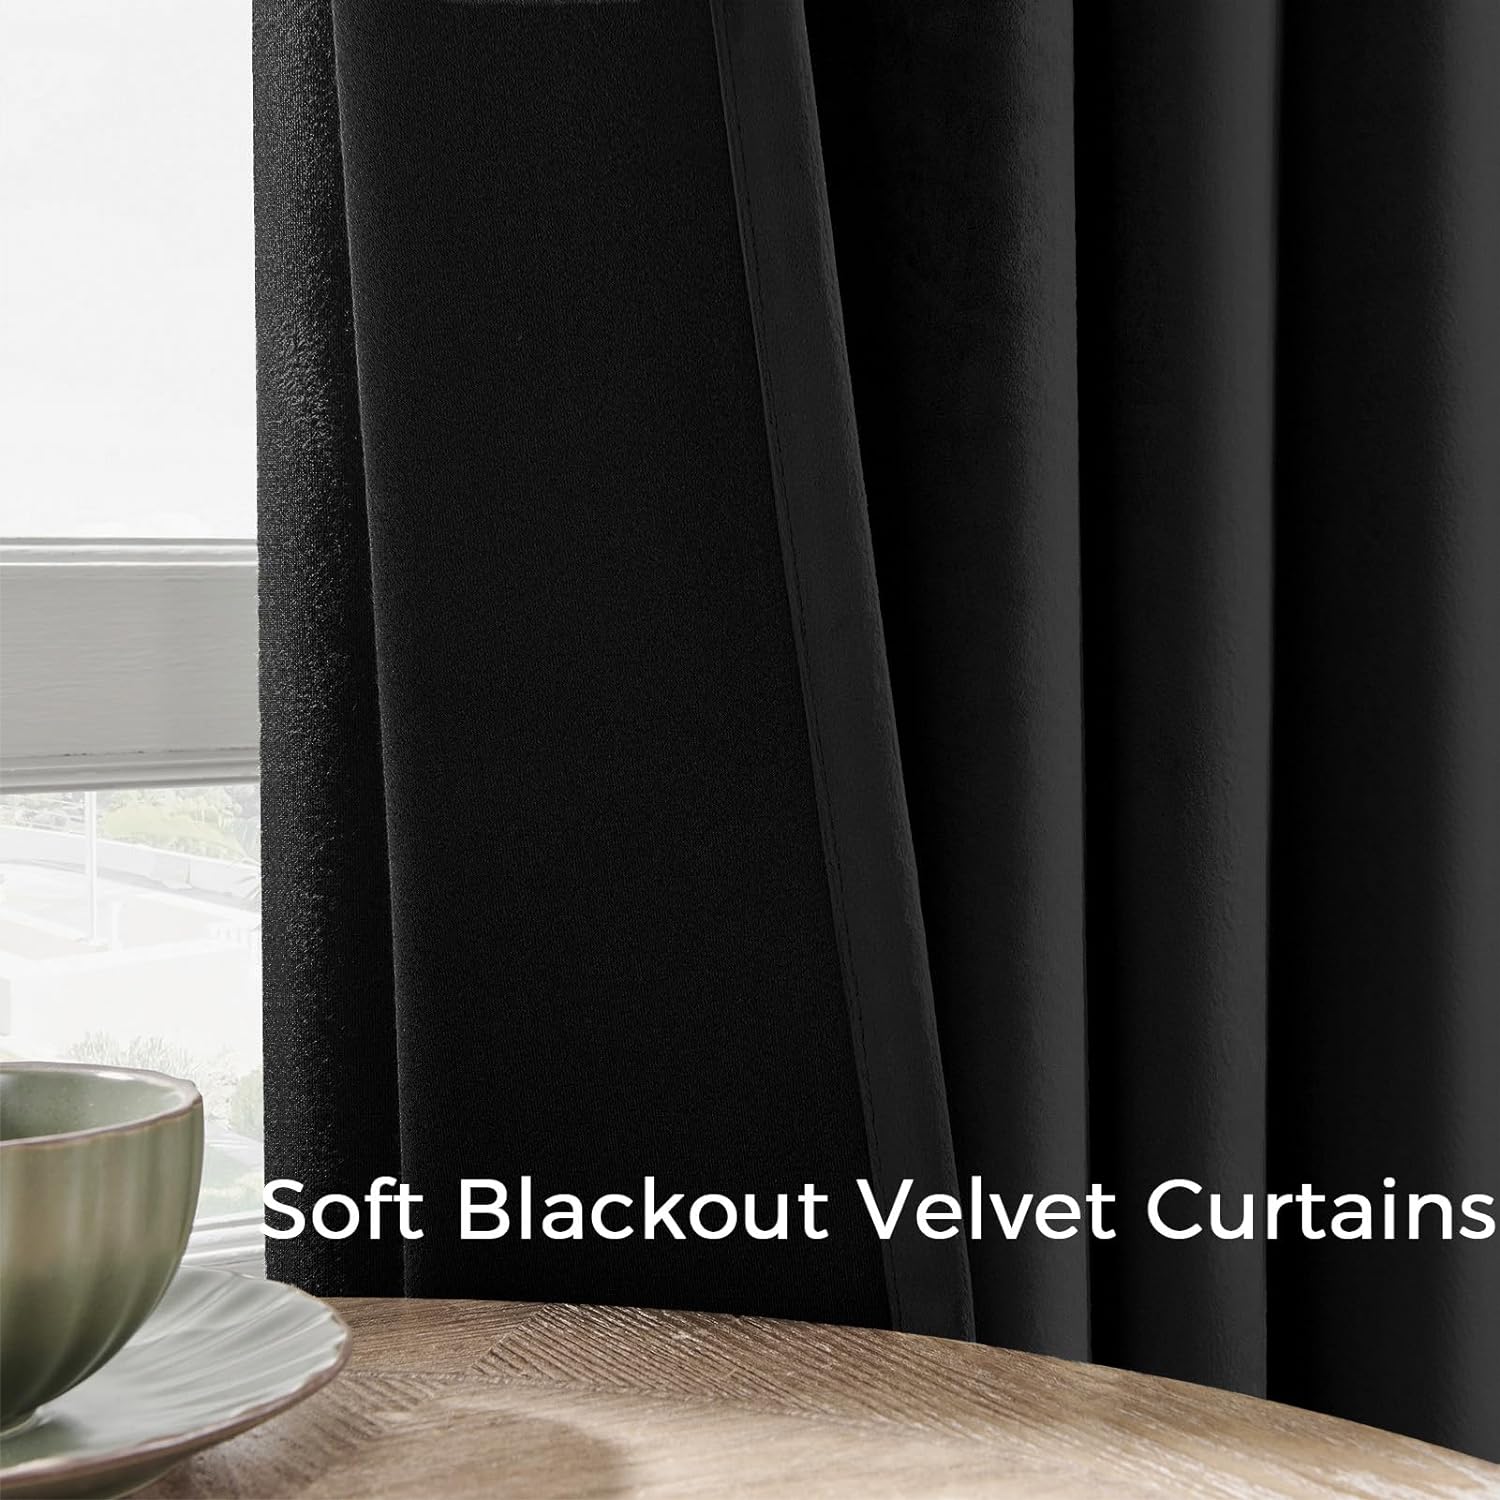 Topfinel 96 Inch Black Velvet Curtains 2 Panel Set for Bedroom Back Tab Thermal Insulated Sound Proof Room Darkening Drapes for Living Room 96 Inch Length 2 Panels,8FT,Black